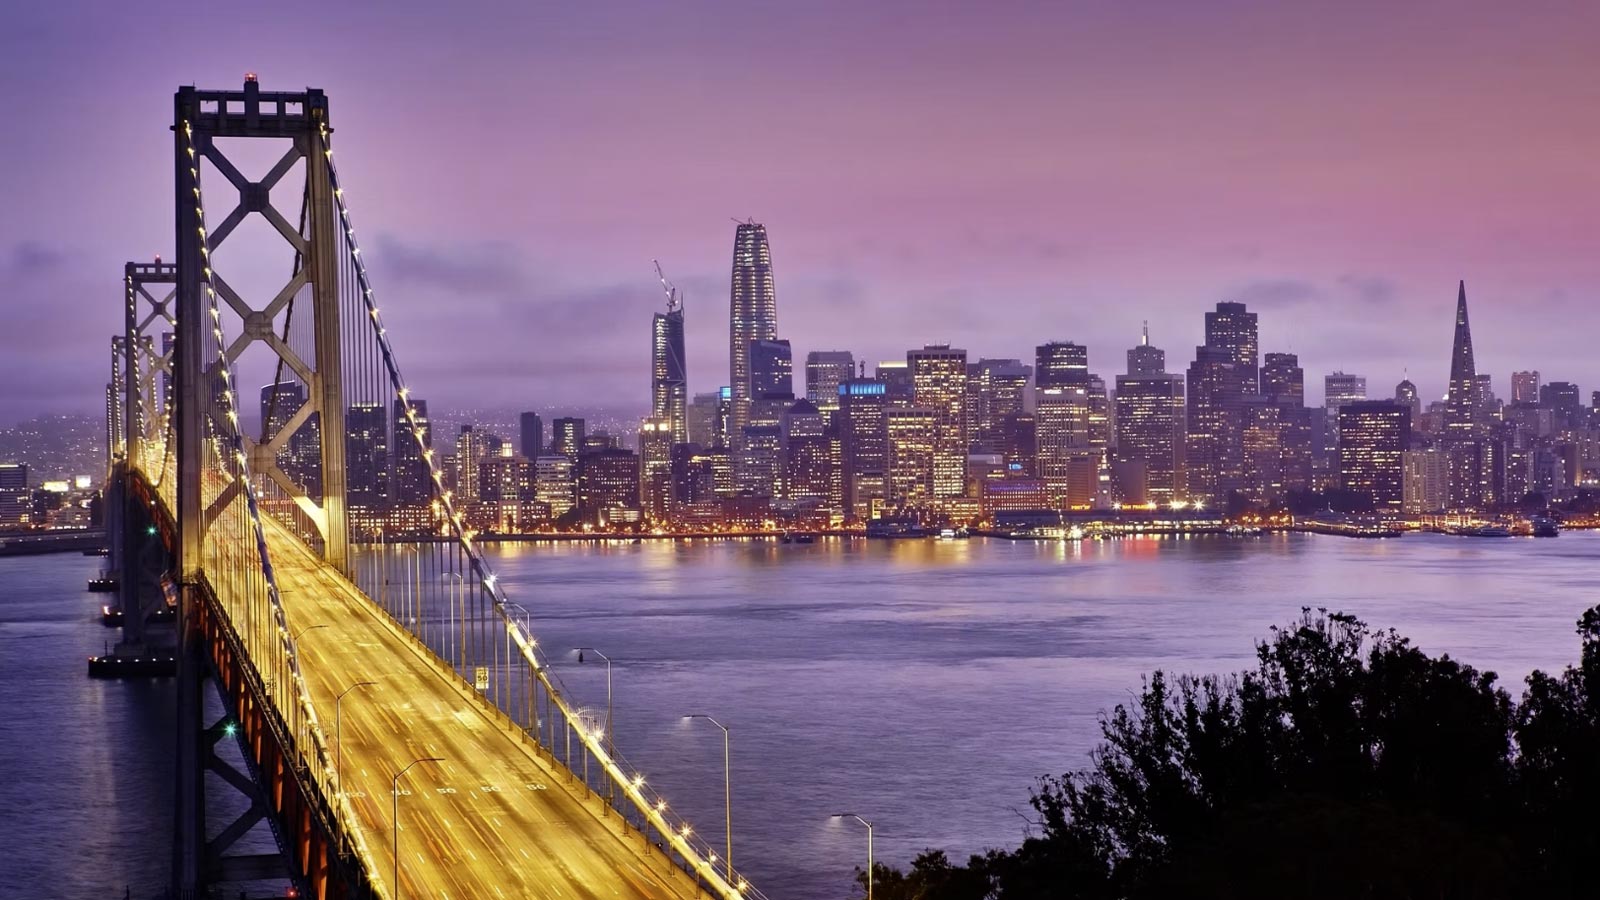 San Francisco skyline at night